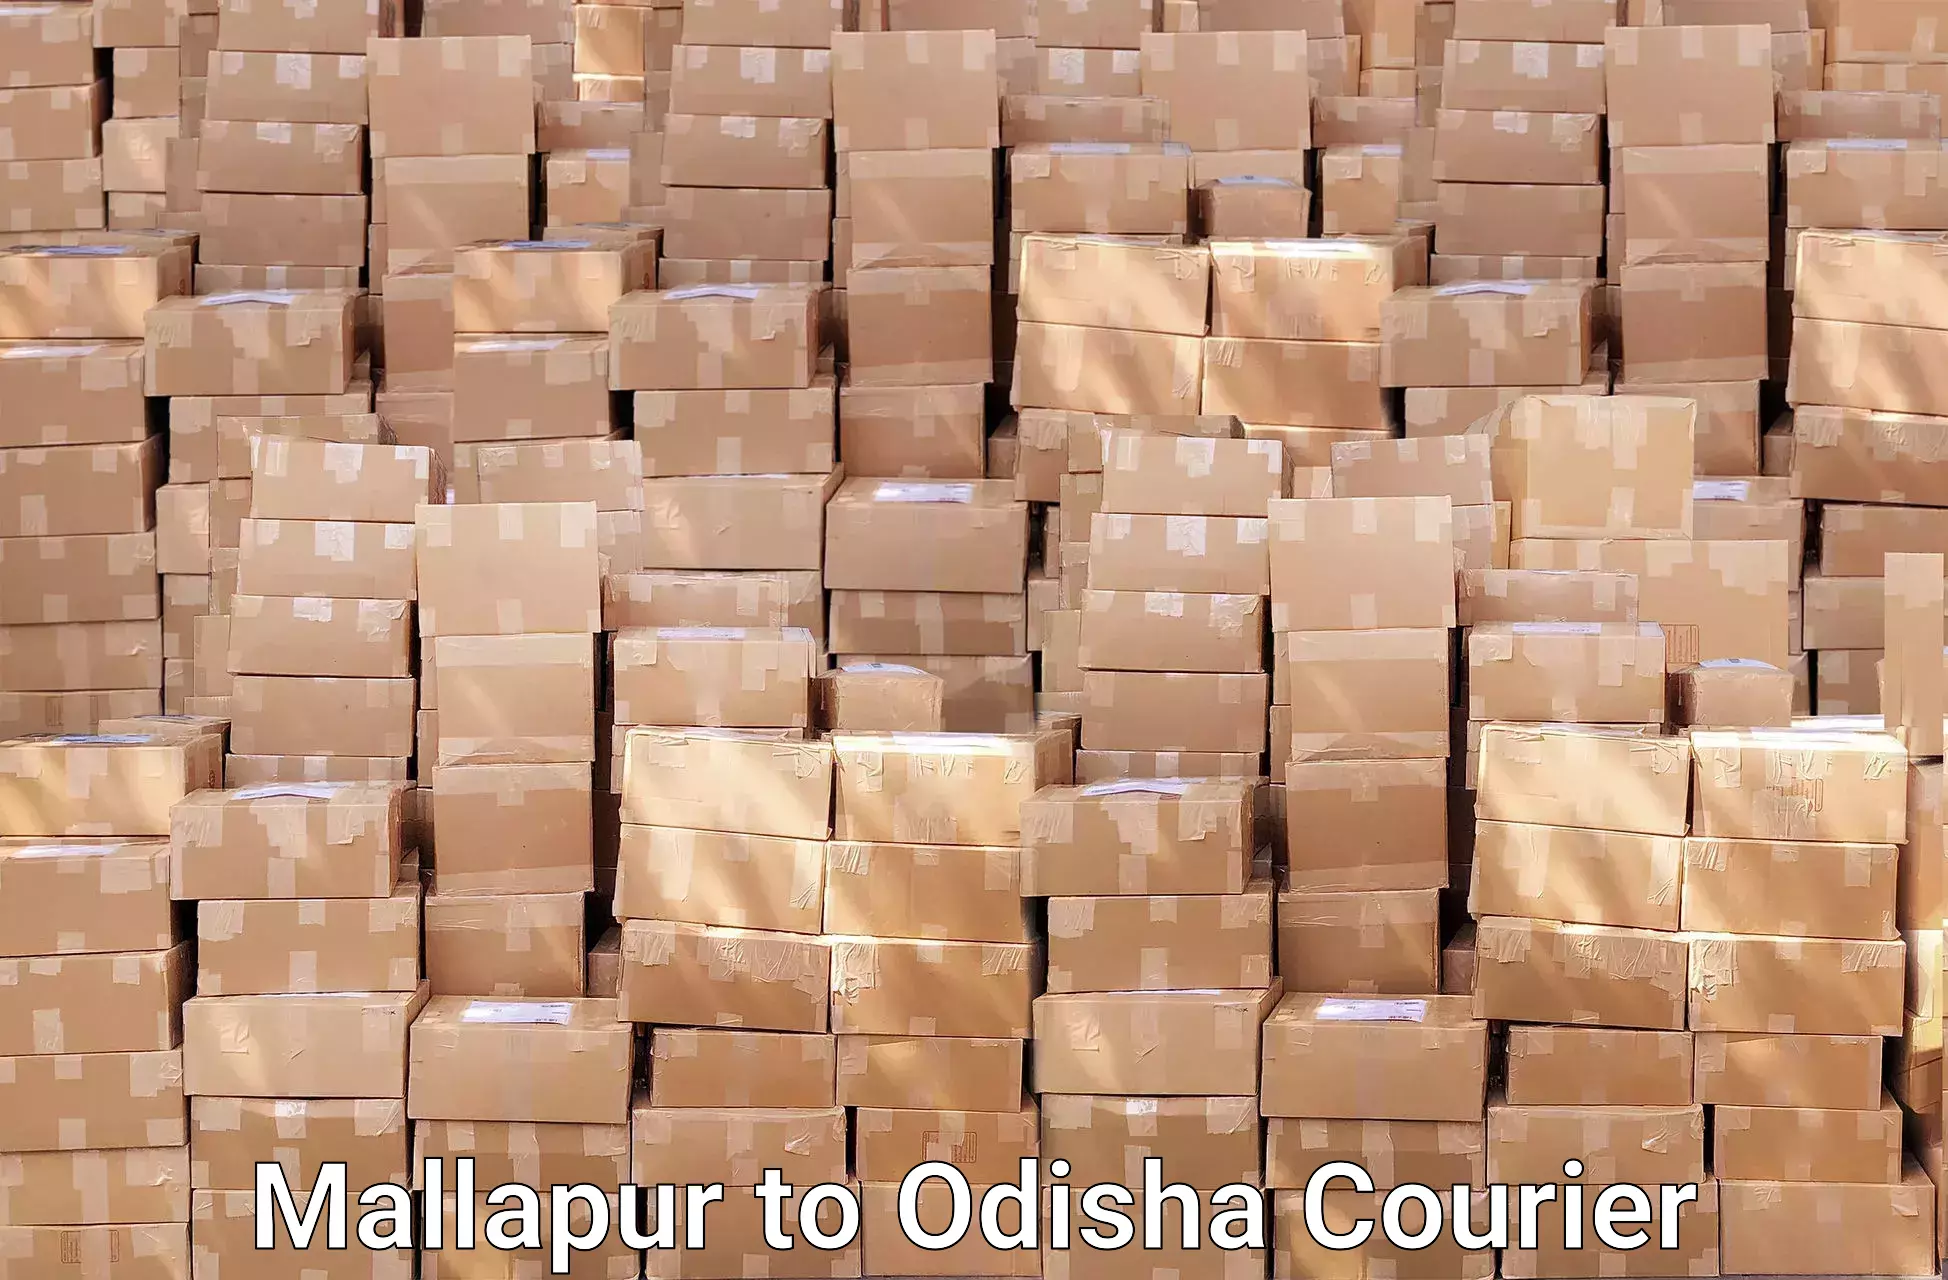 Moving and storage services Mallapur to Odisha